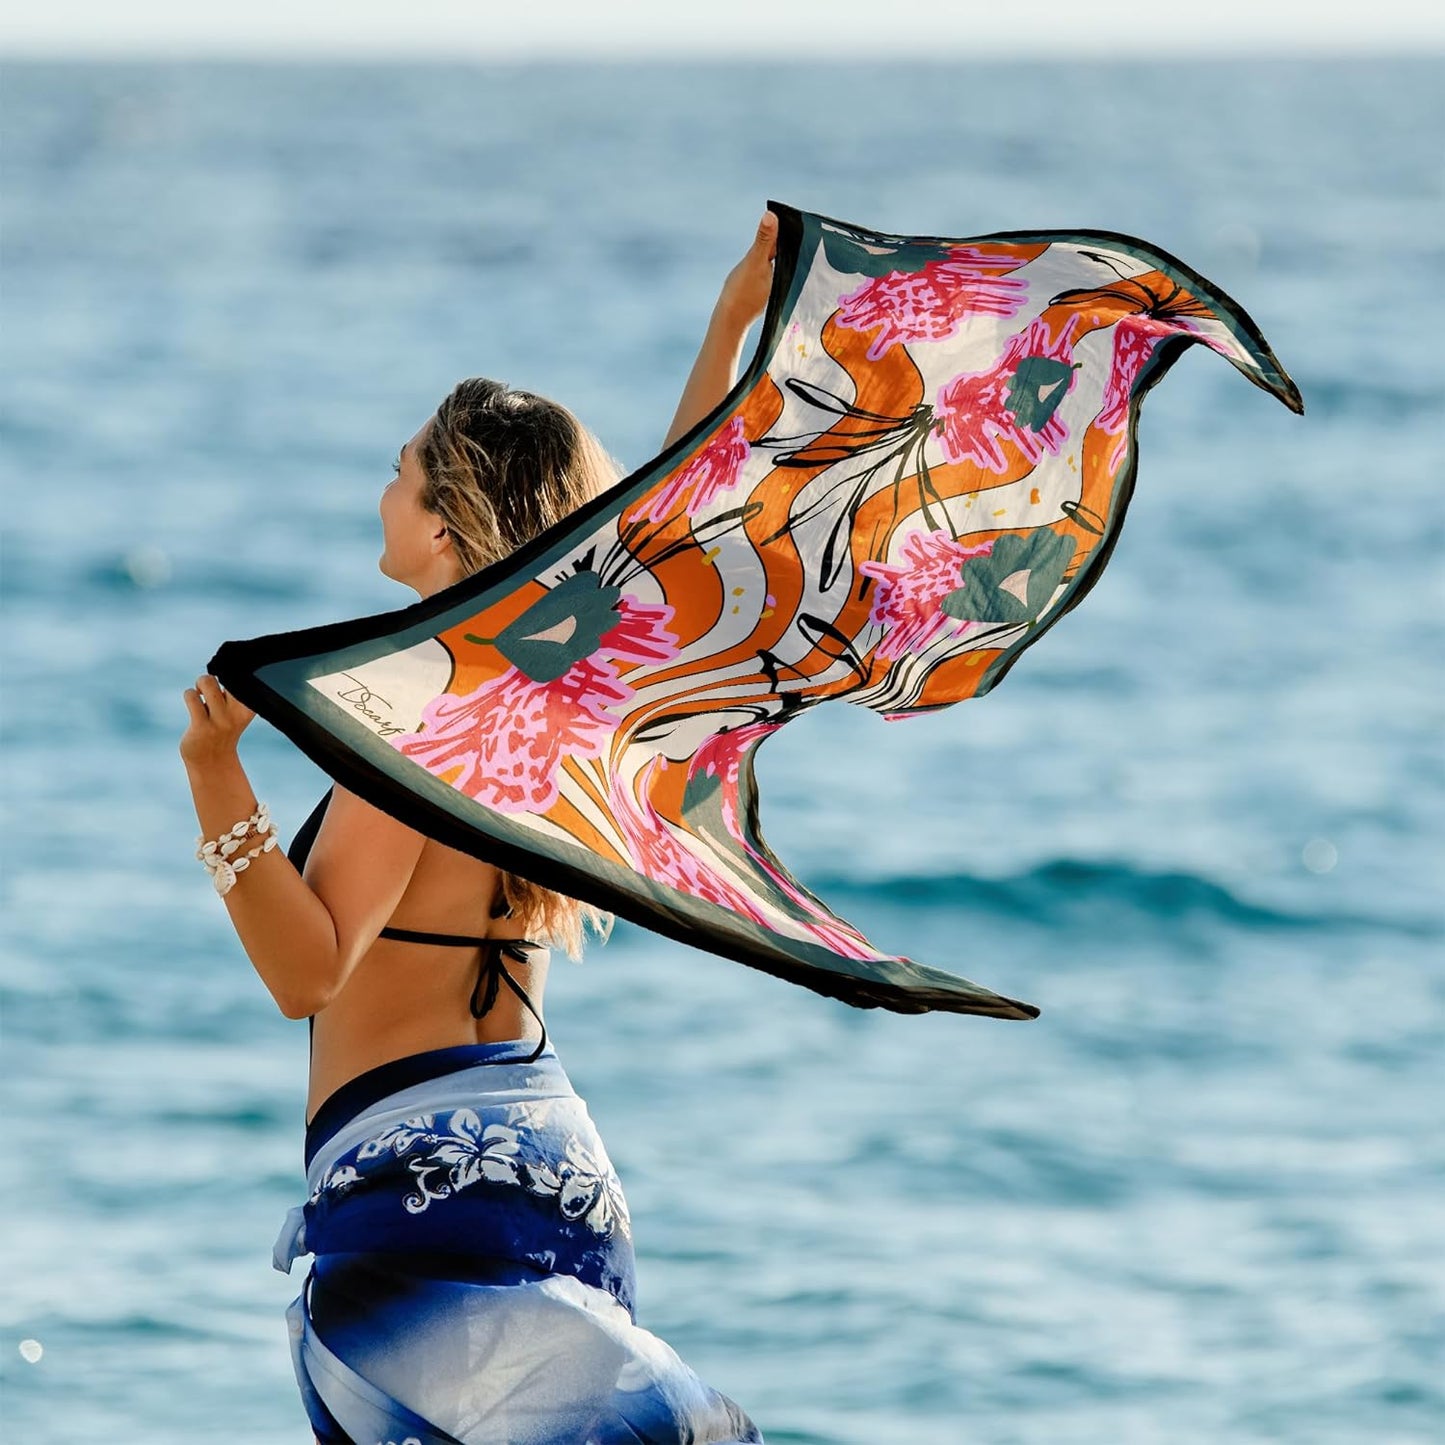 dscarf Women Sarong Swimsuit Printed Cover up Chiffon Long Bikini Wraps | Pareo Swimwear Beach Bathing Suit Cover Up Flowering Design 2